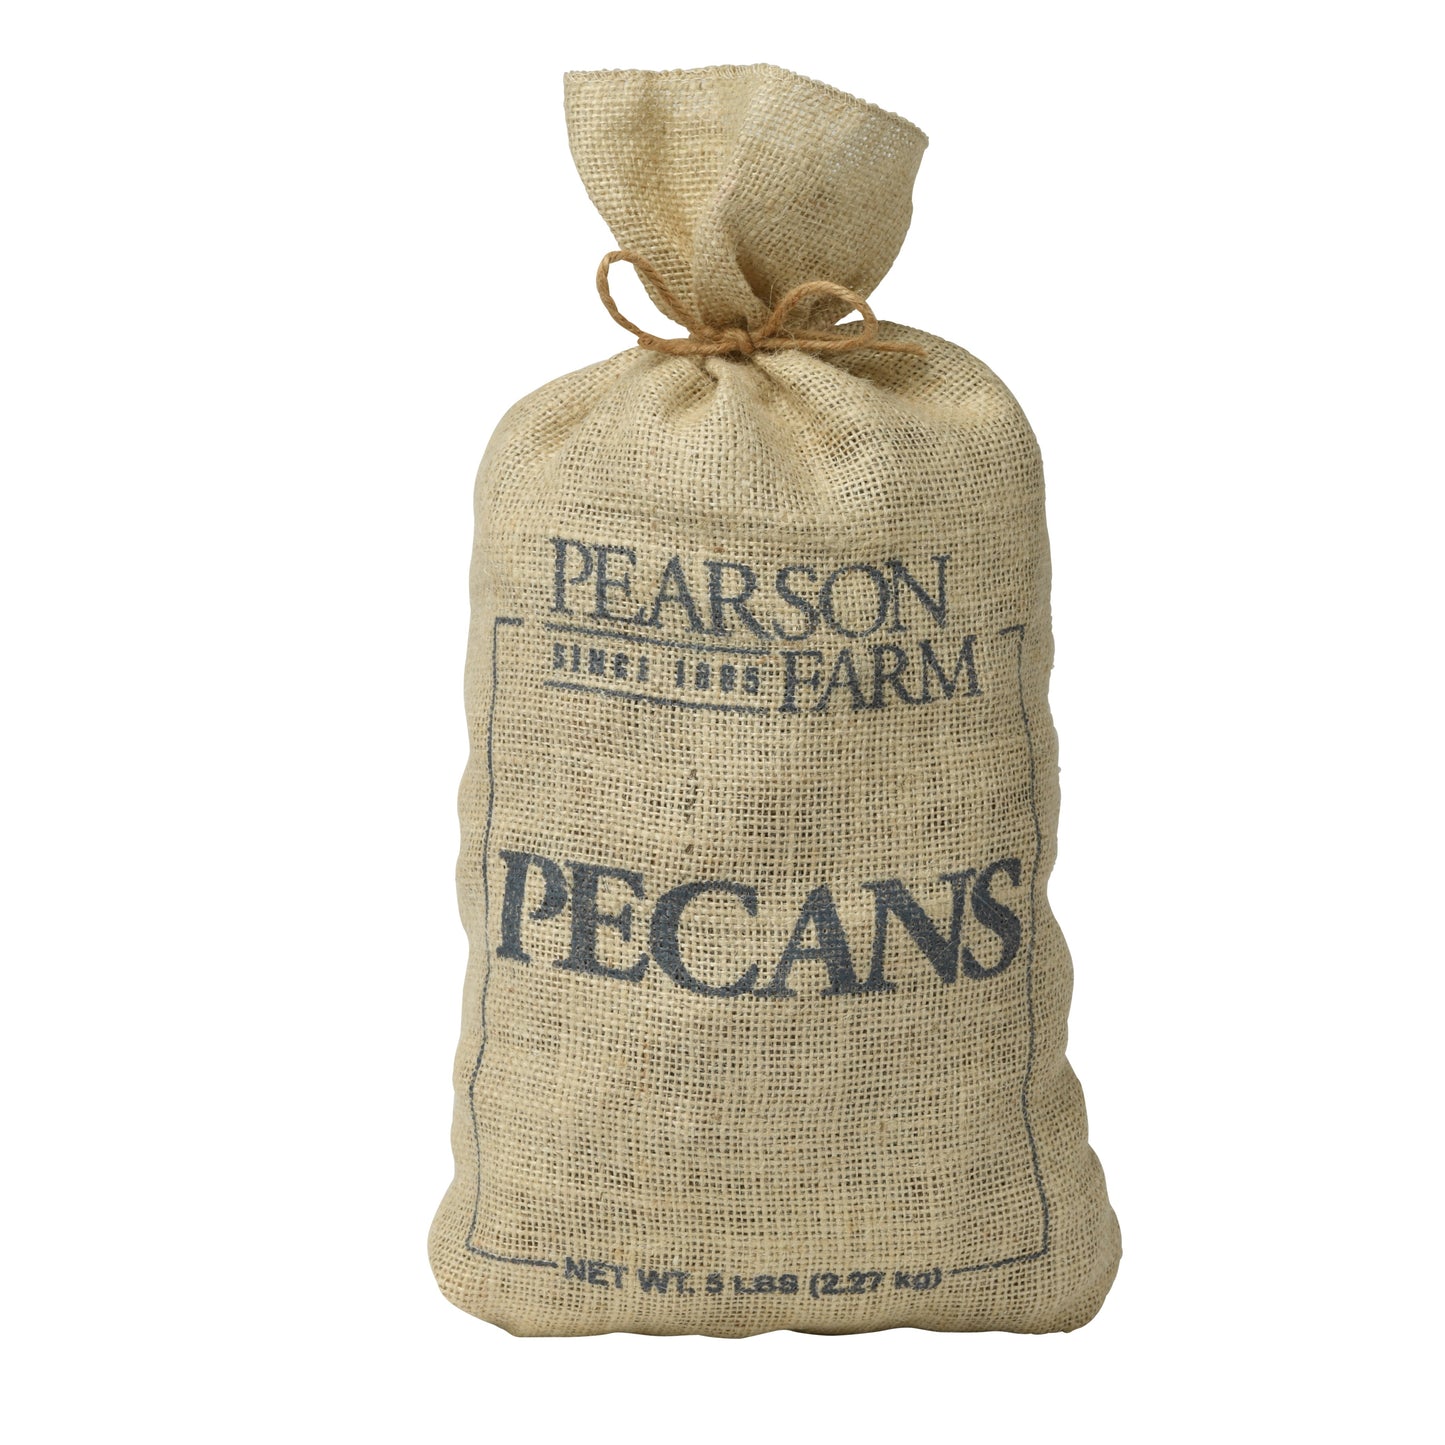 Bag of pecans